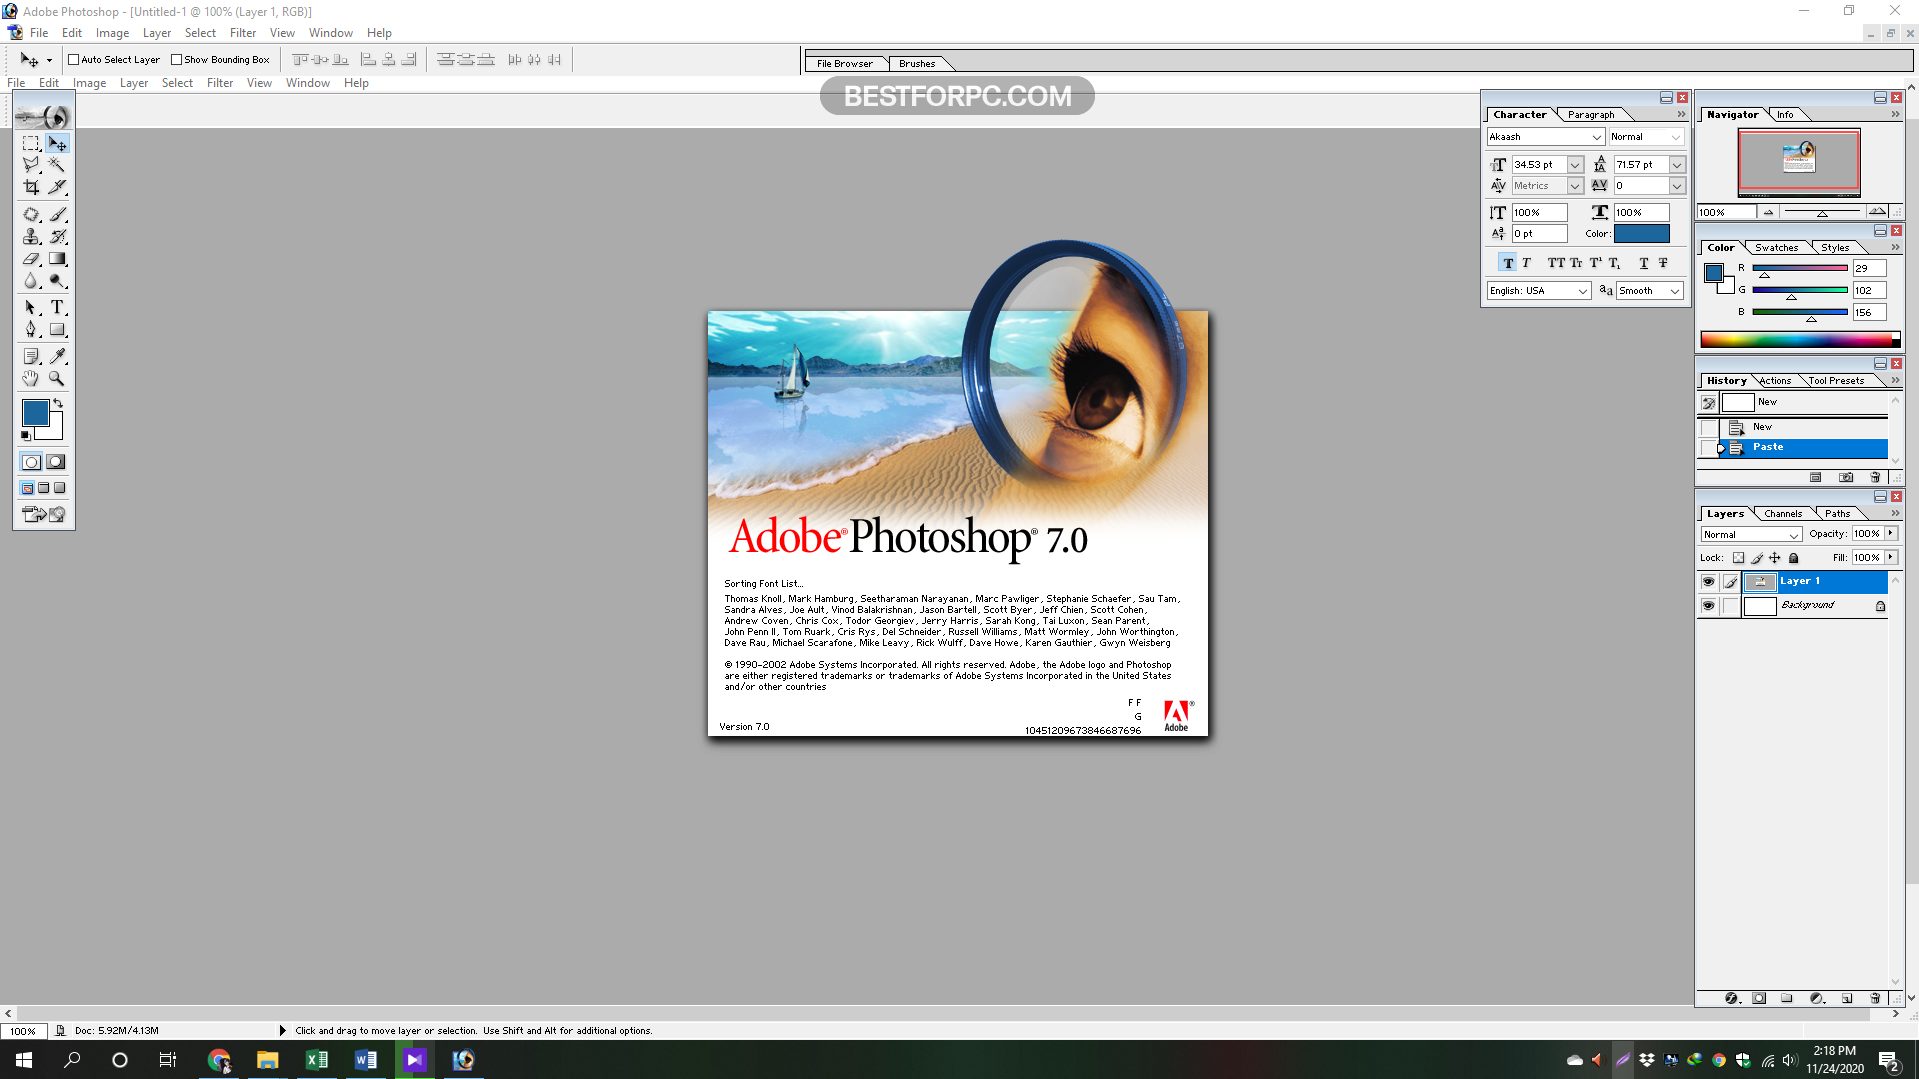 adobe photoshop 7.0 full version free download windows 10